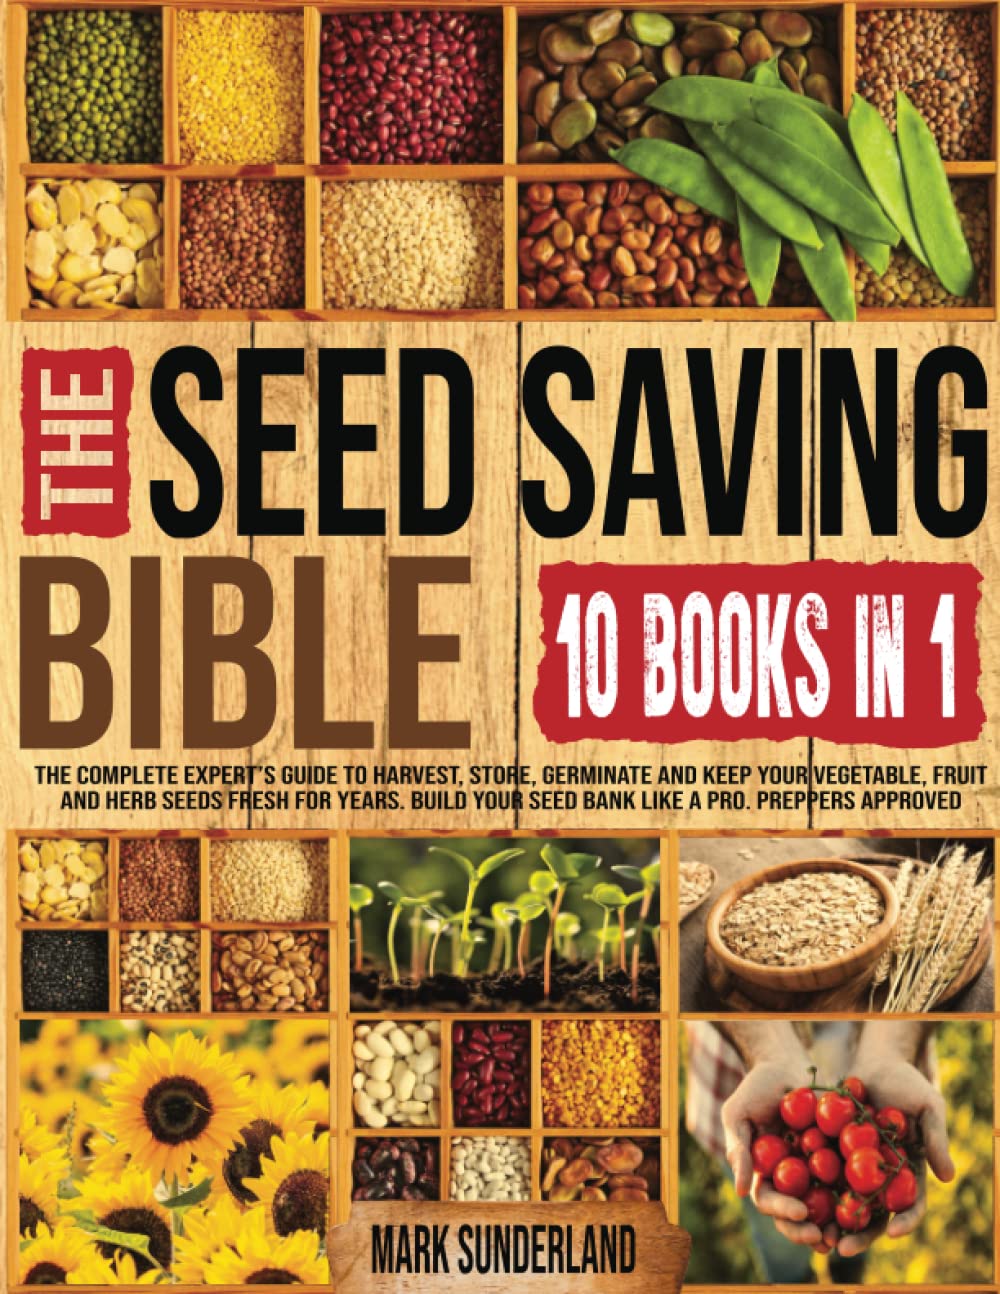 The Seed Saving Bible